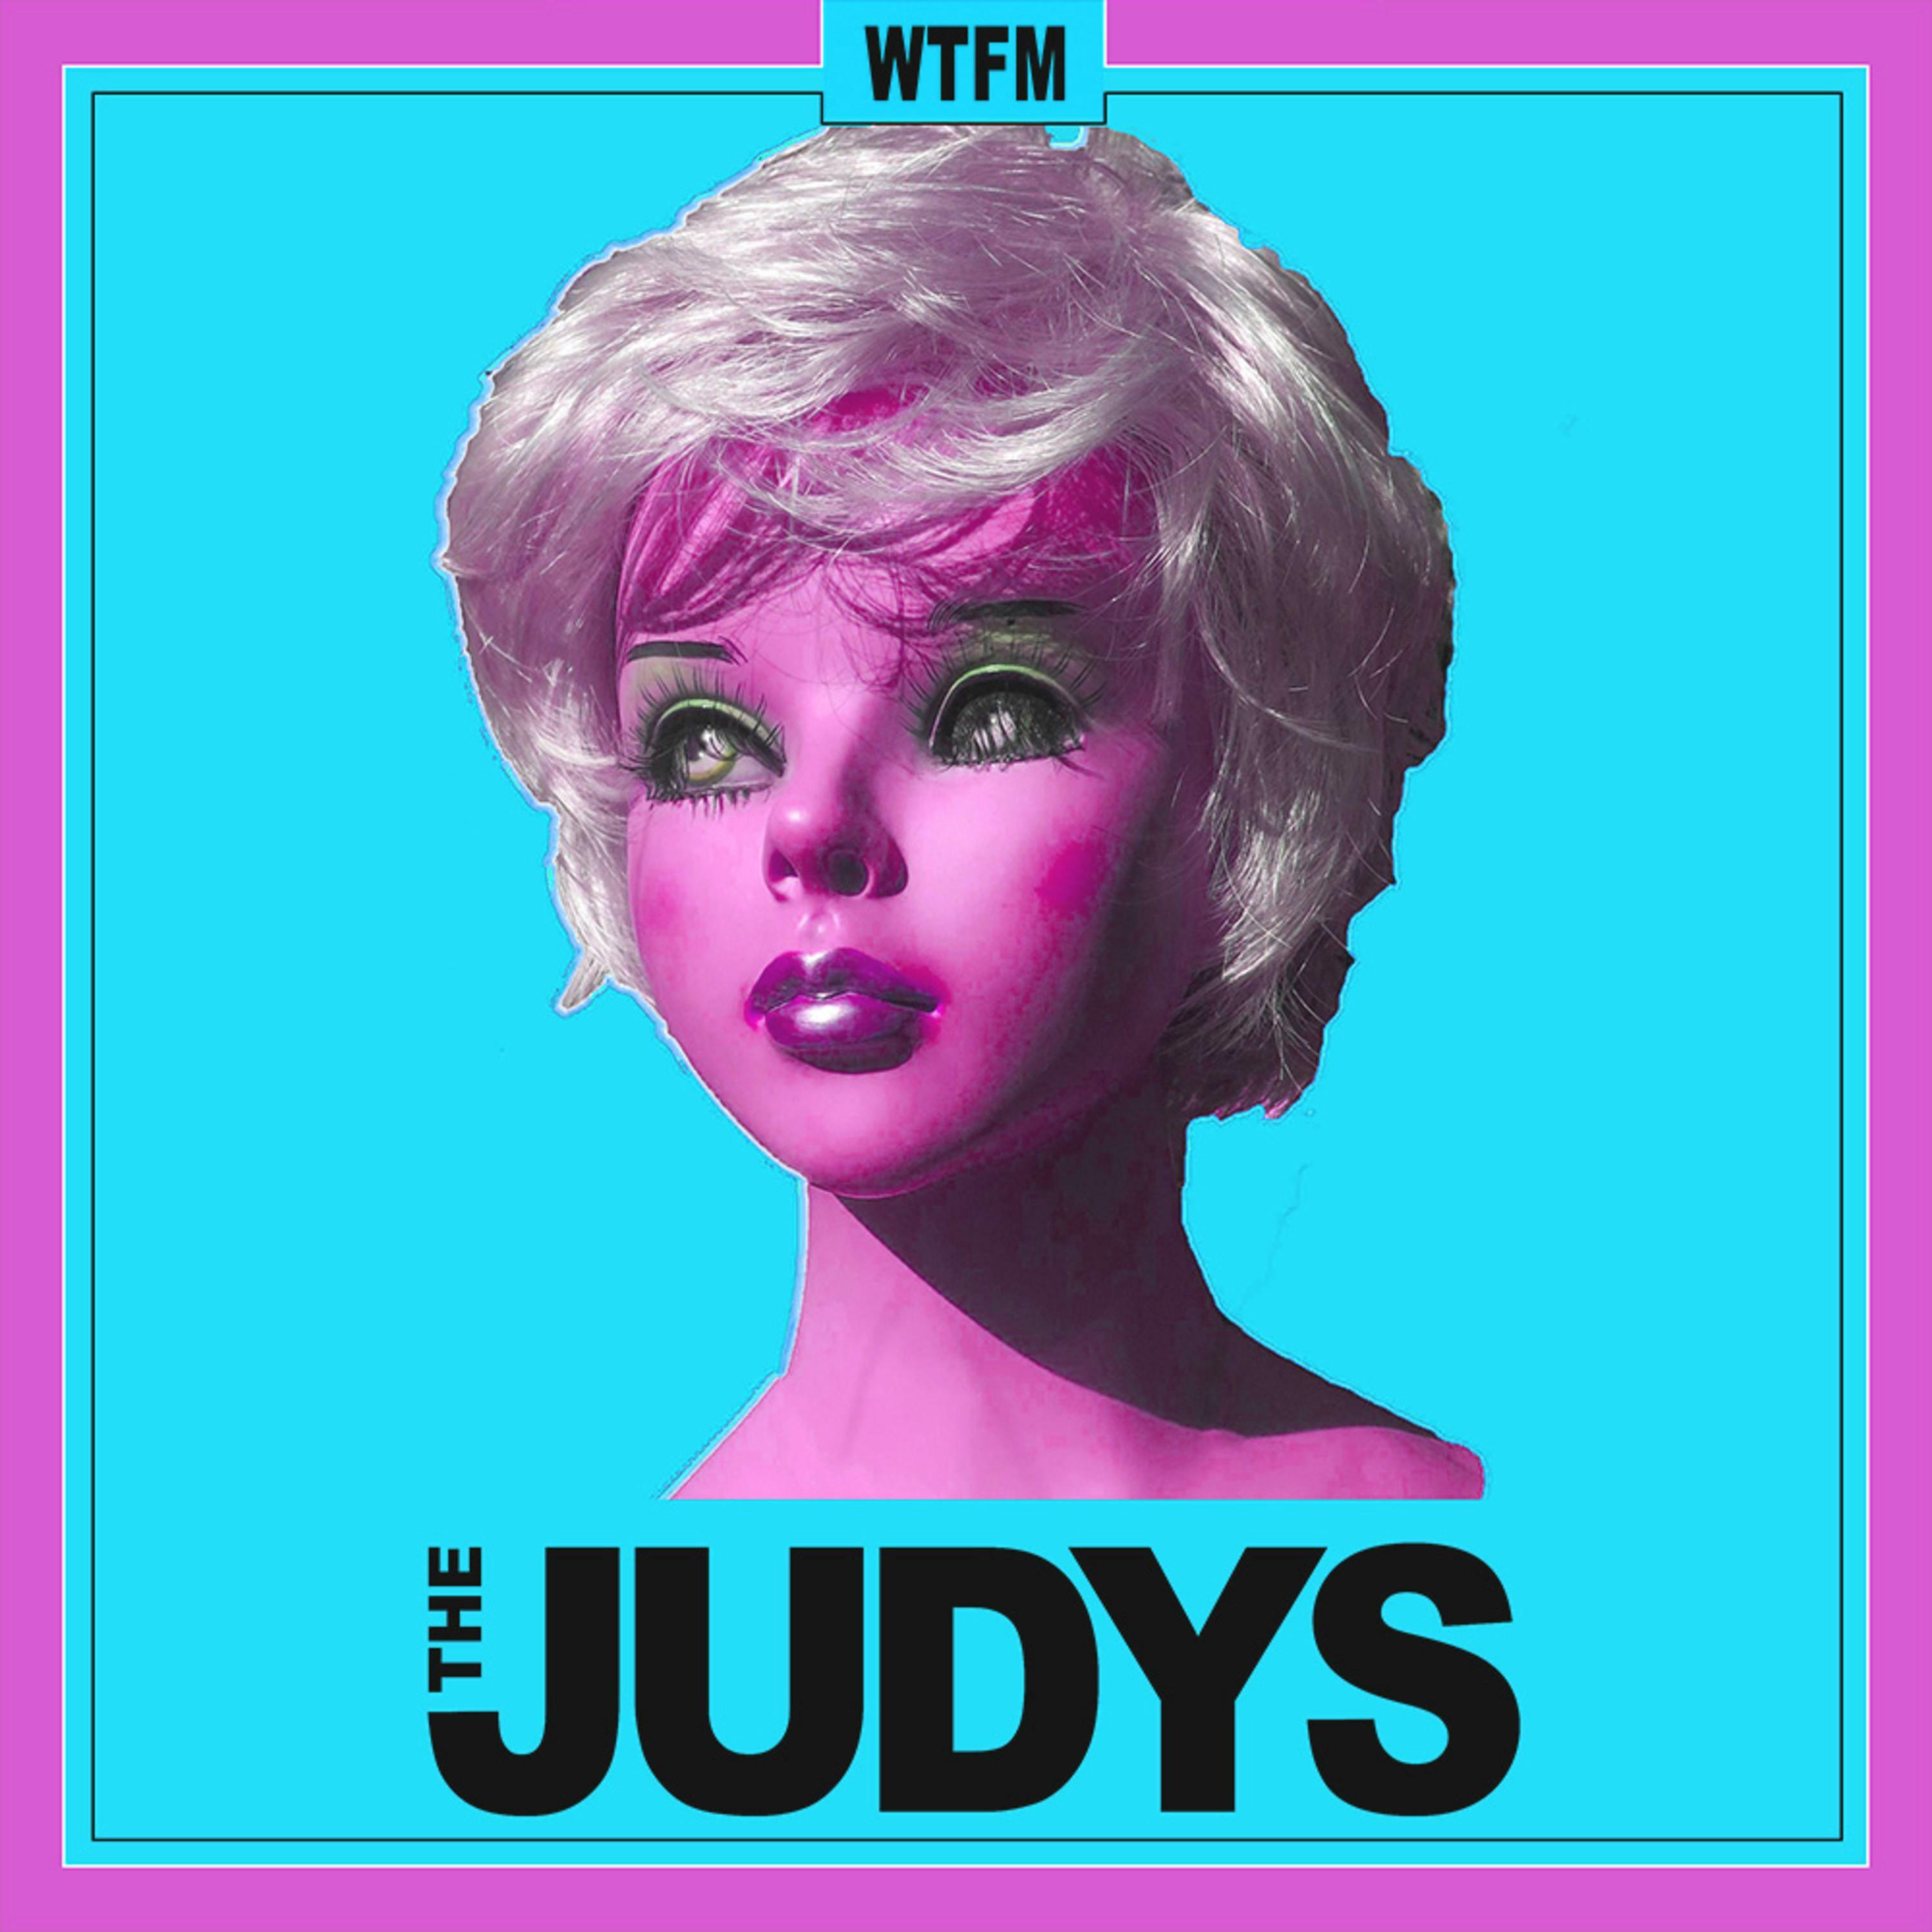 The Judys Wtfm Iheartradio 9531